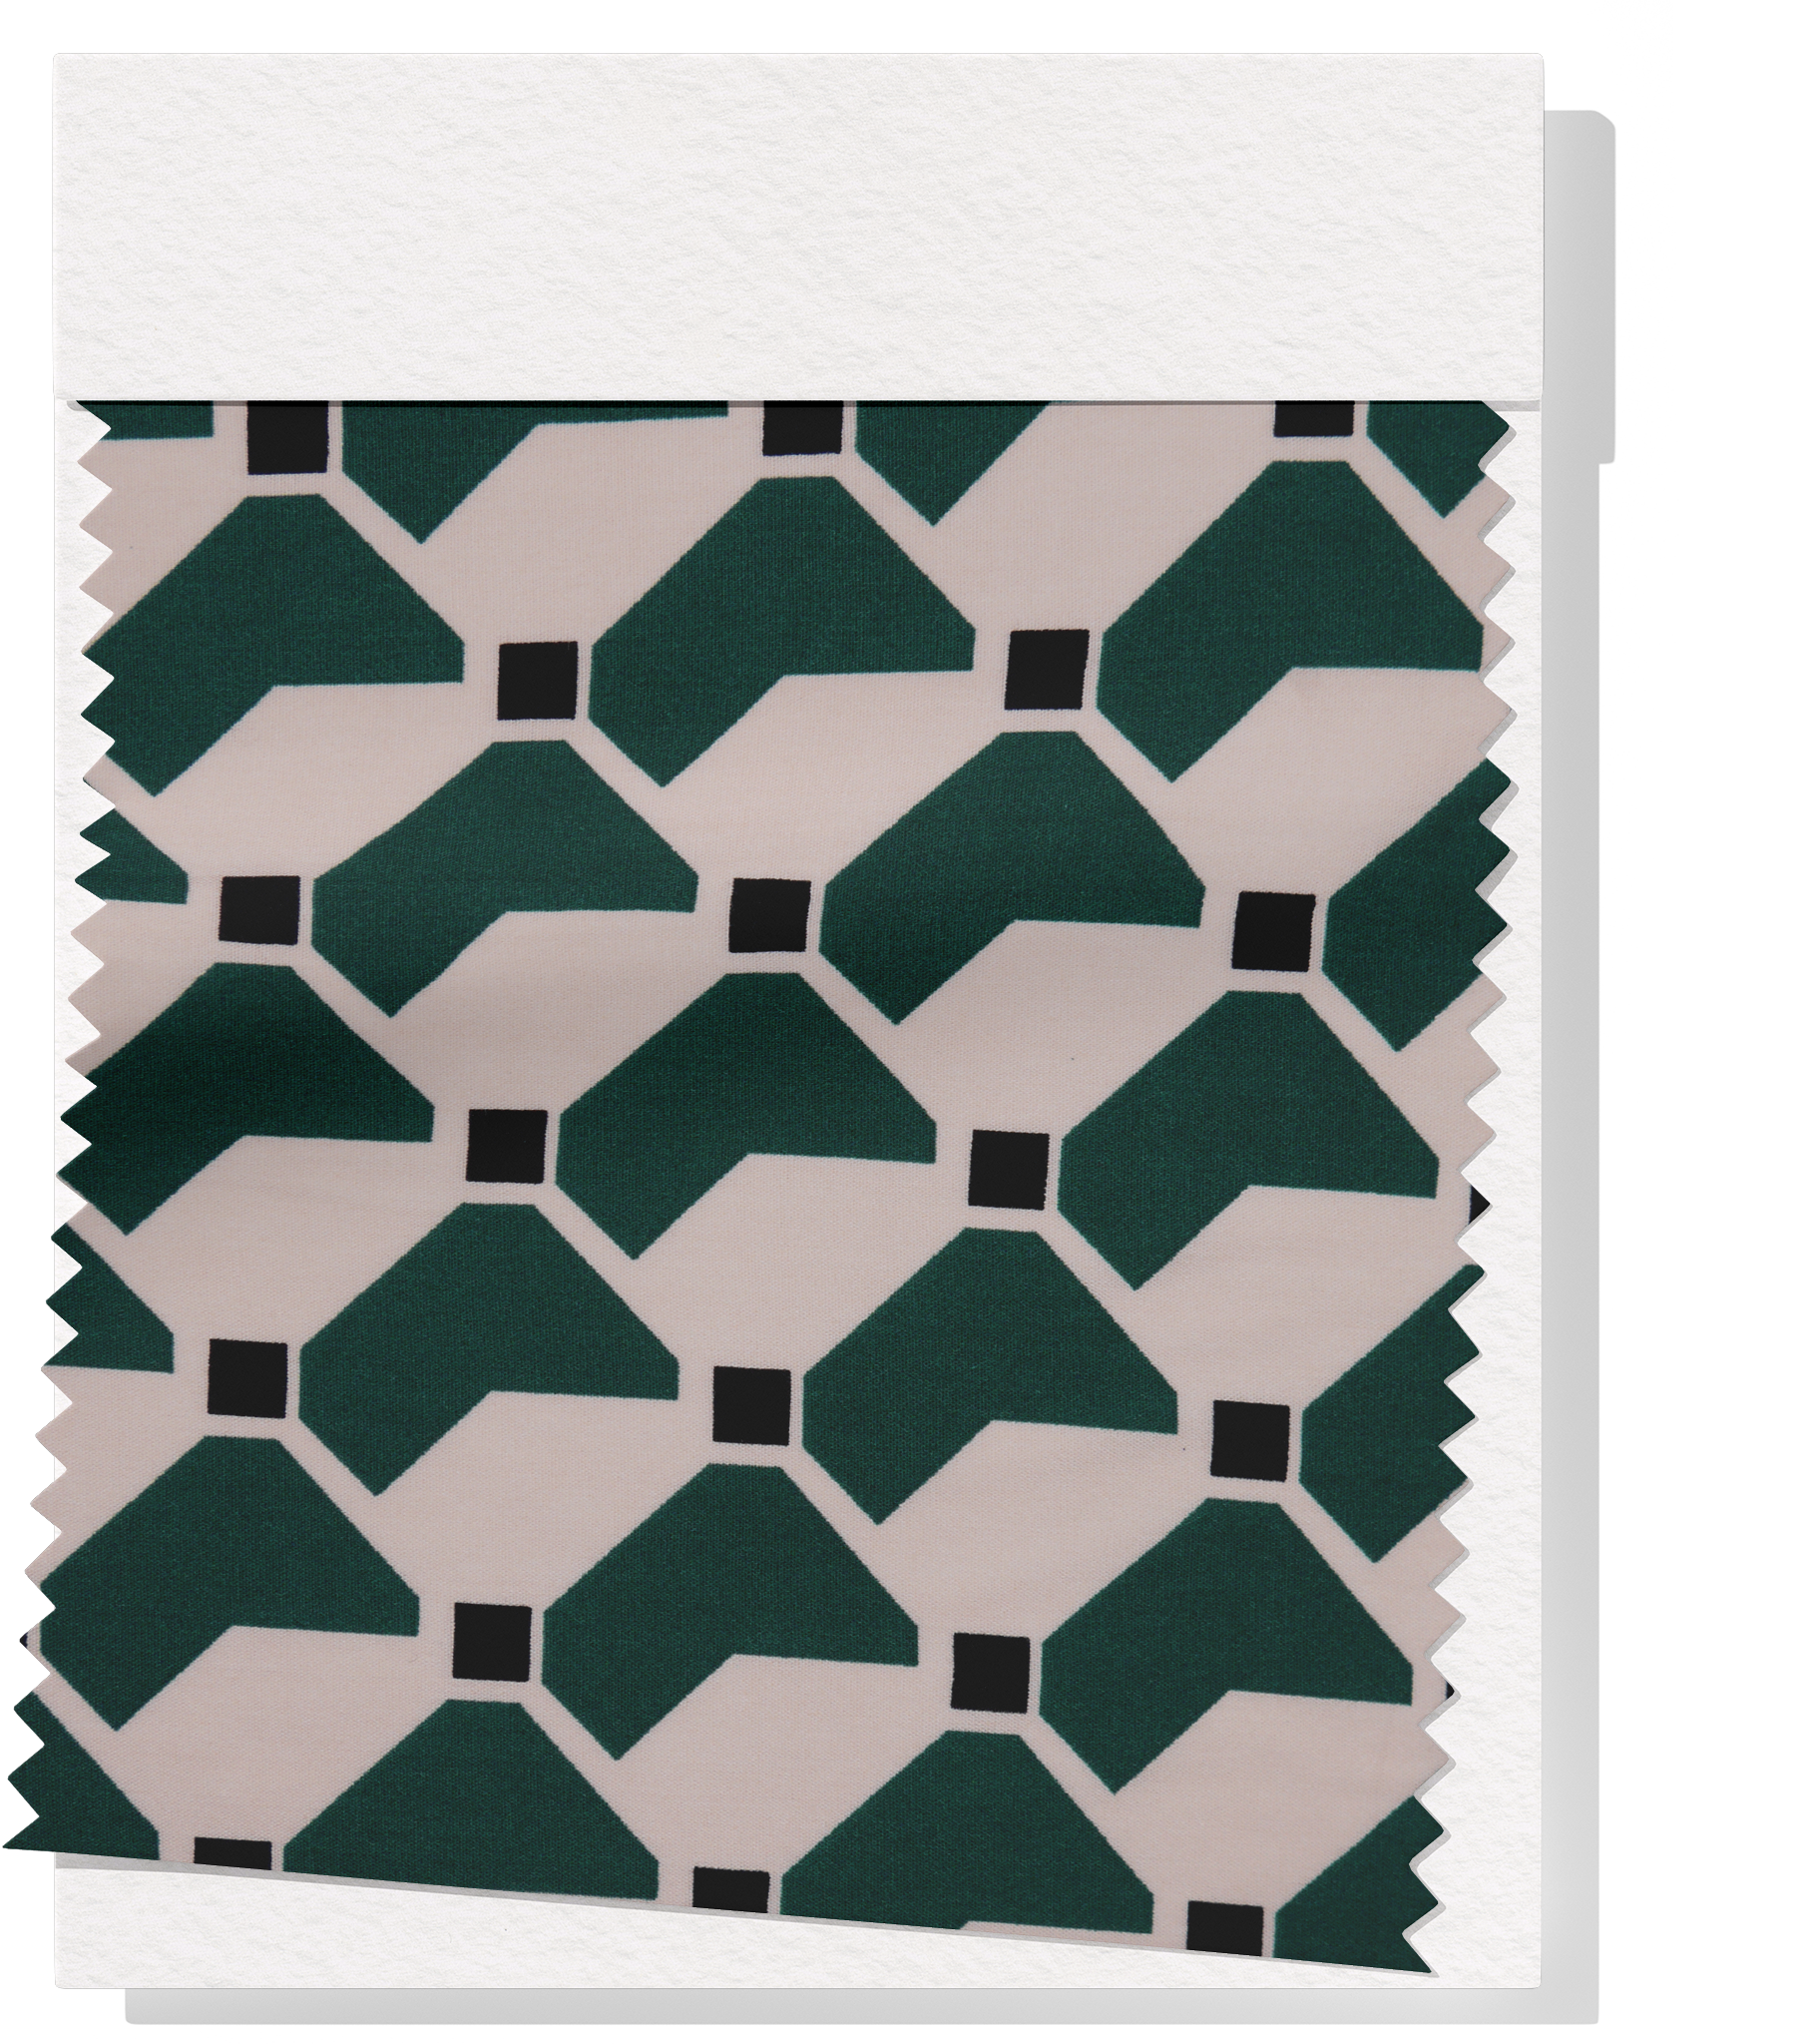 Printed Rayon $9.00p/m - Breeland (Green & Black)